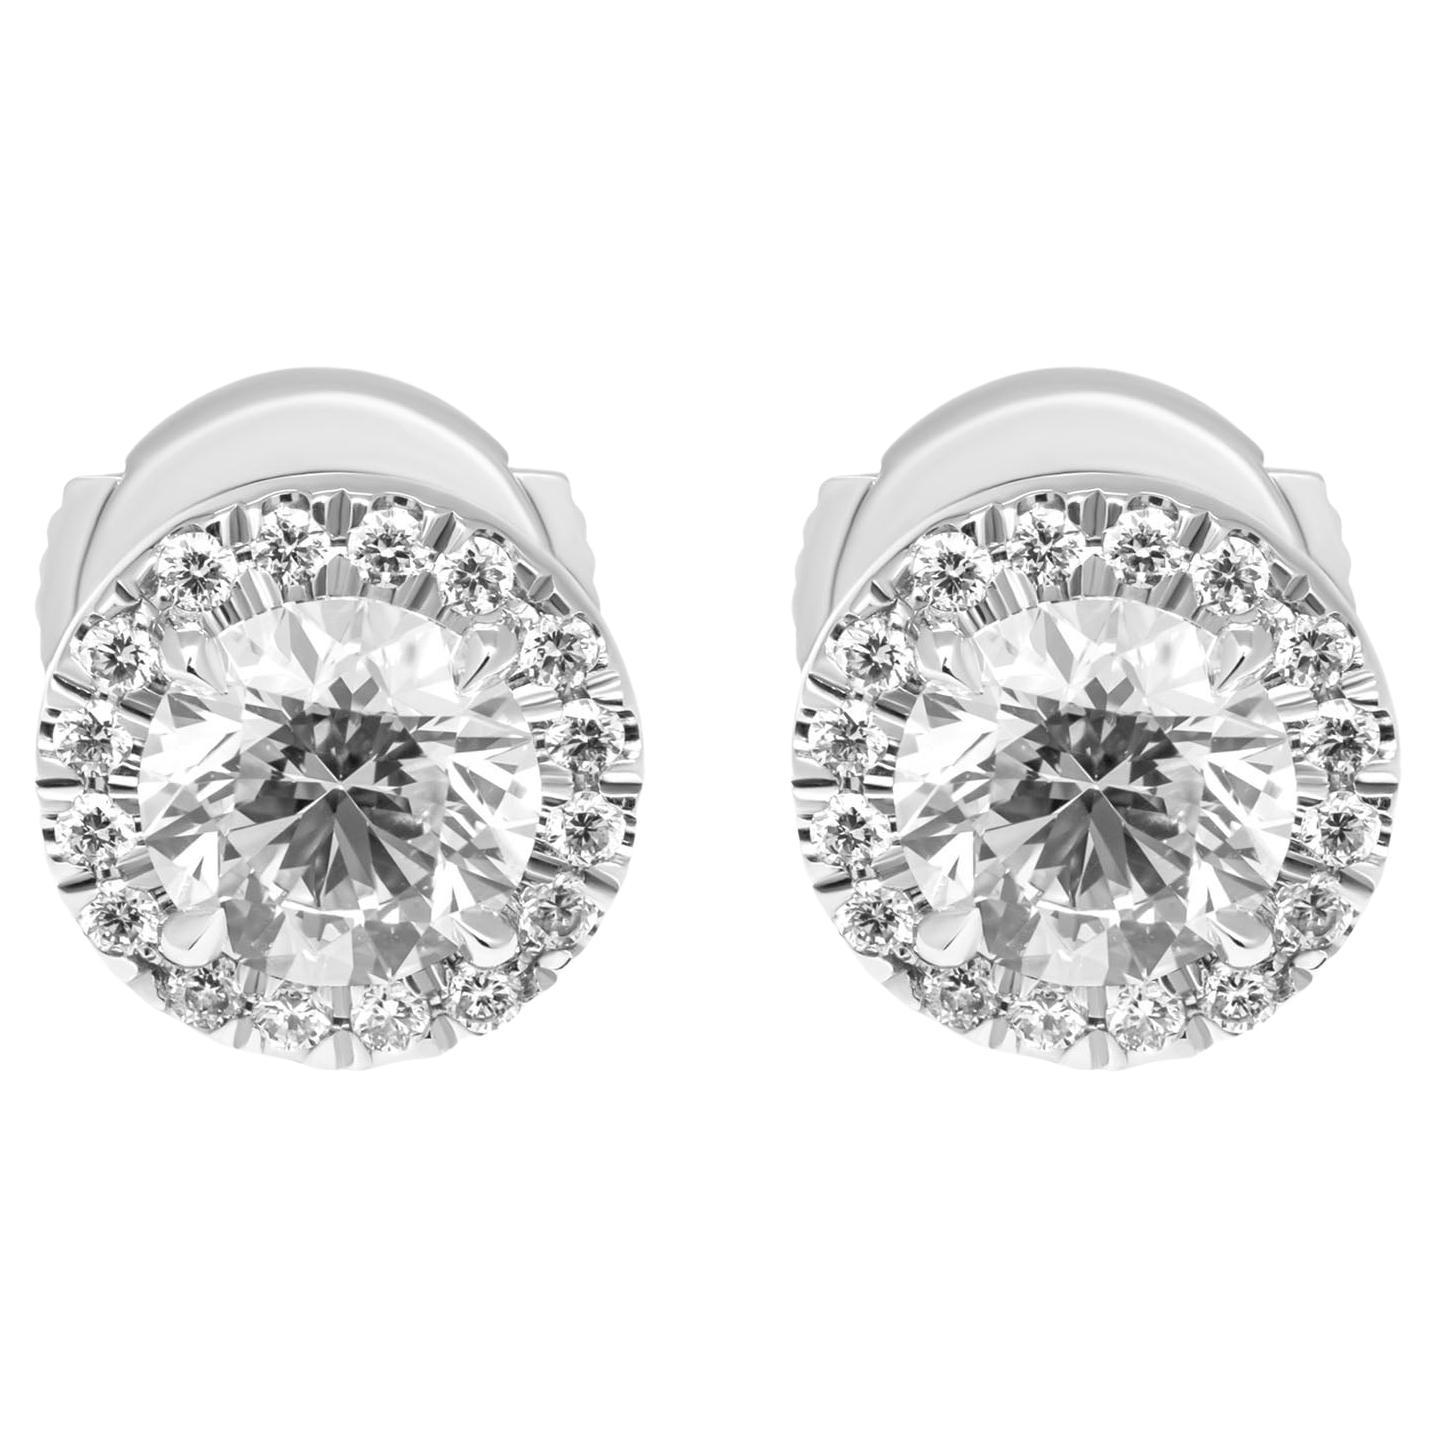  Classic halo with Round 0.70 carat Diamond studs in Platinum